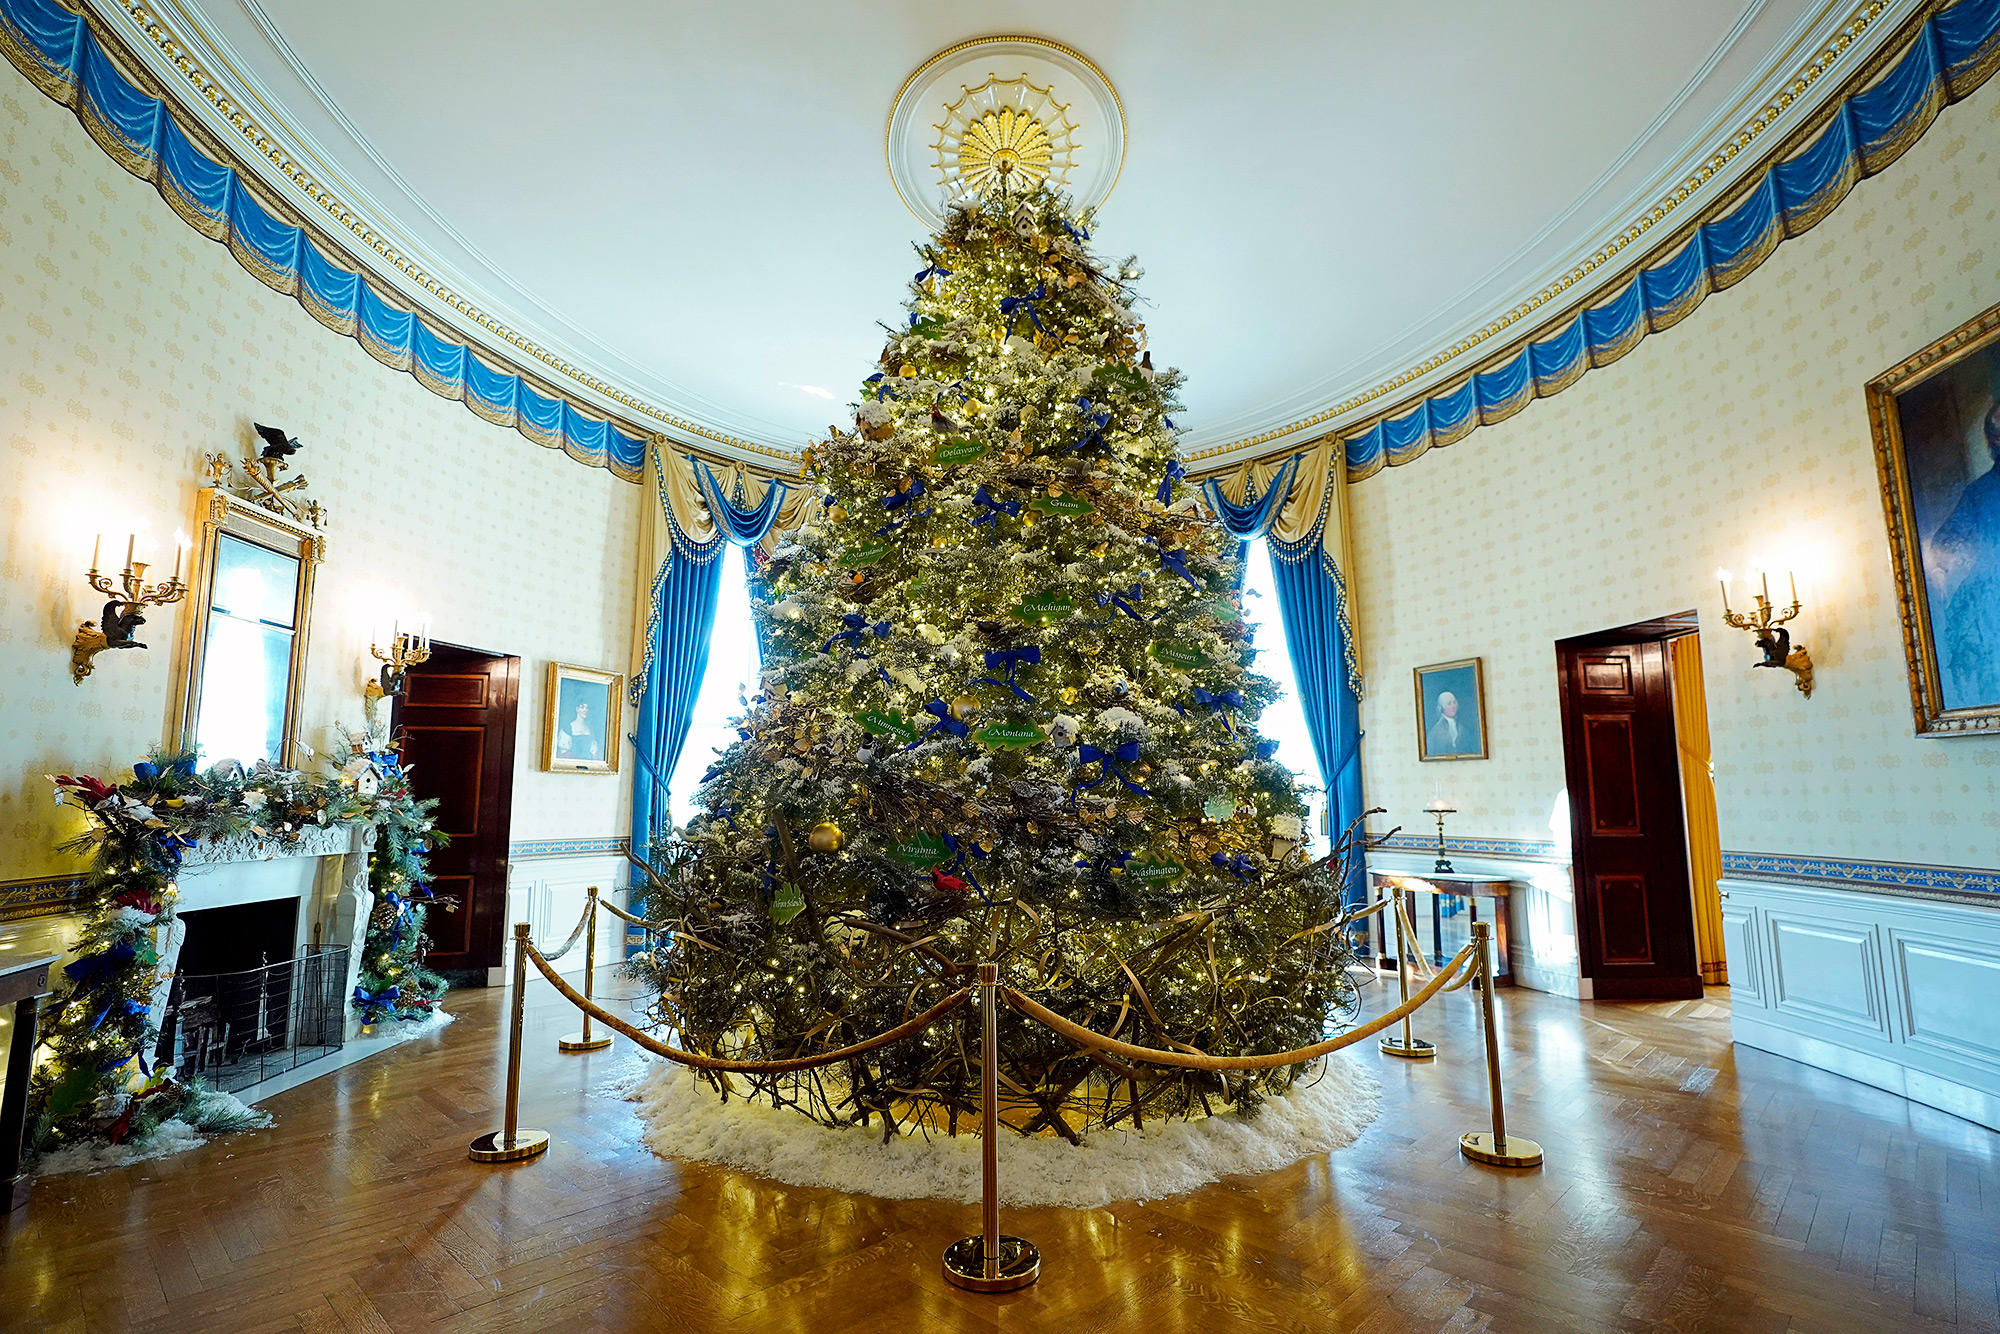 Cardi B Shows Off 'Beautiful' Christmas Decorations